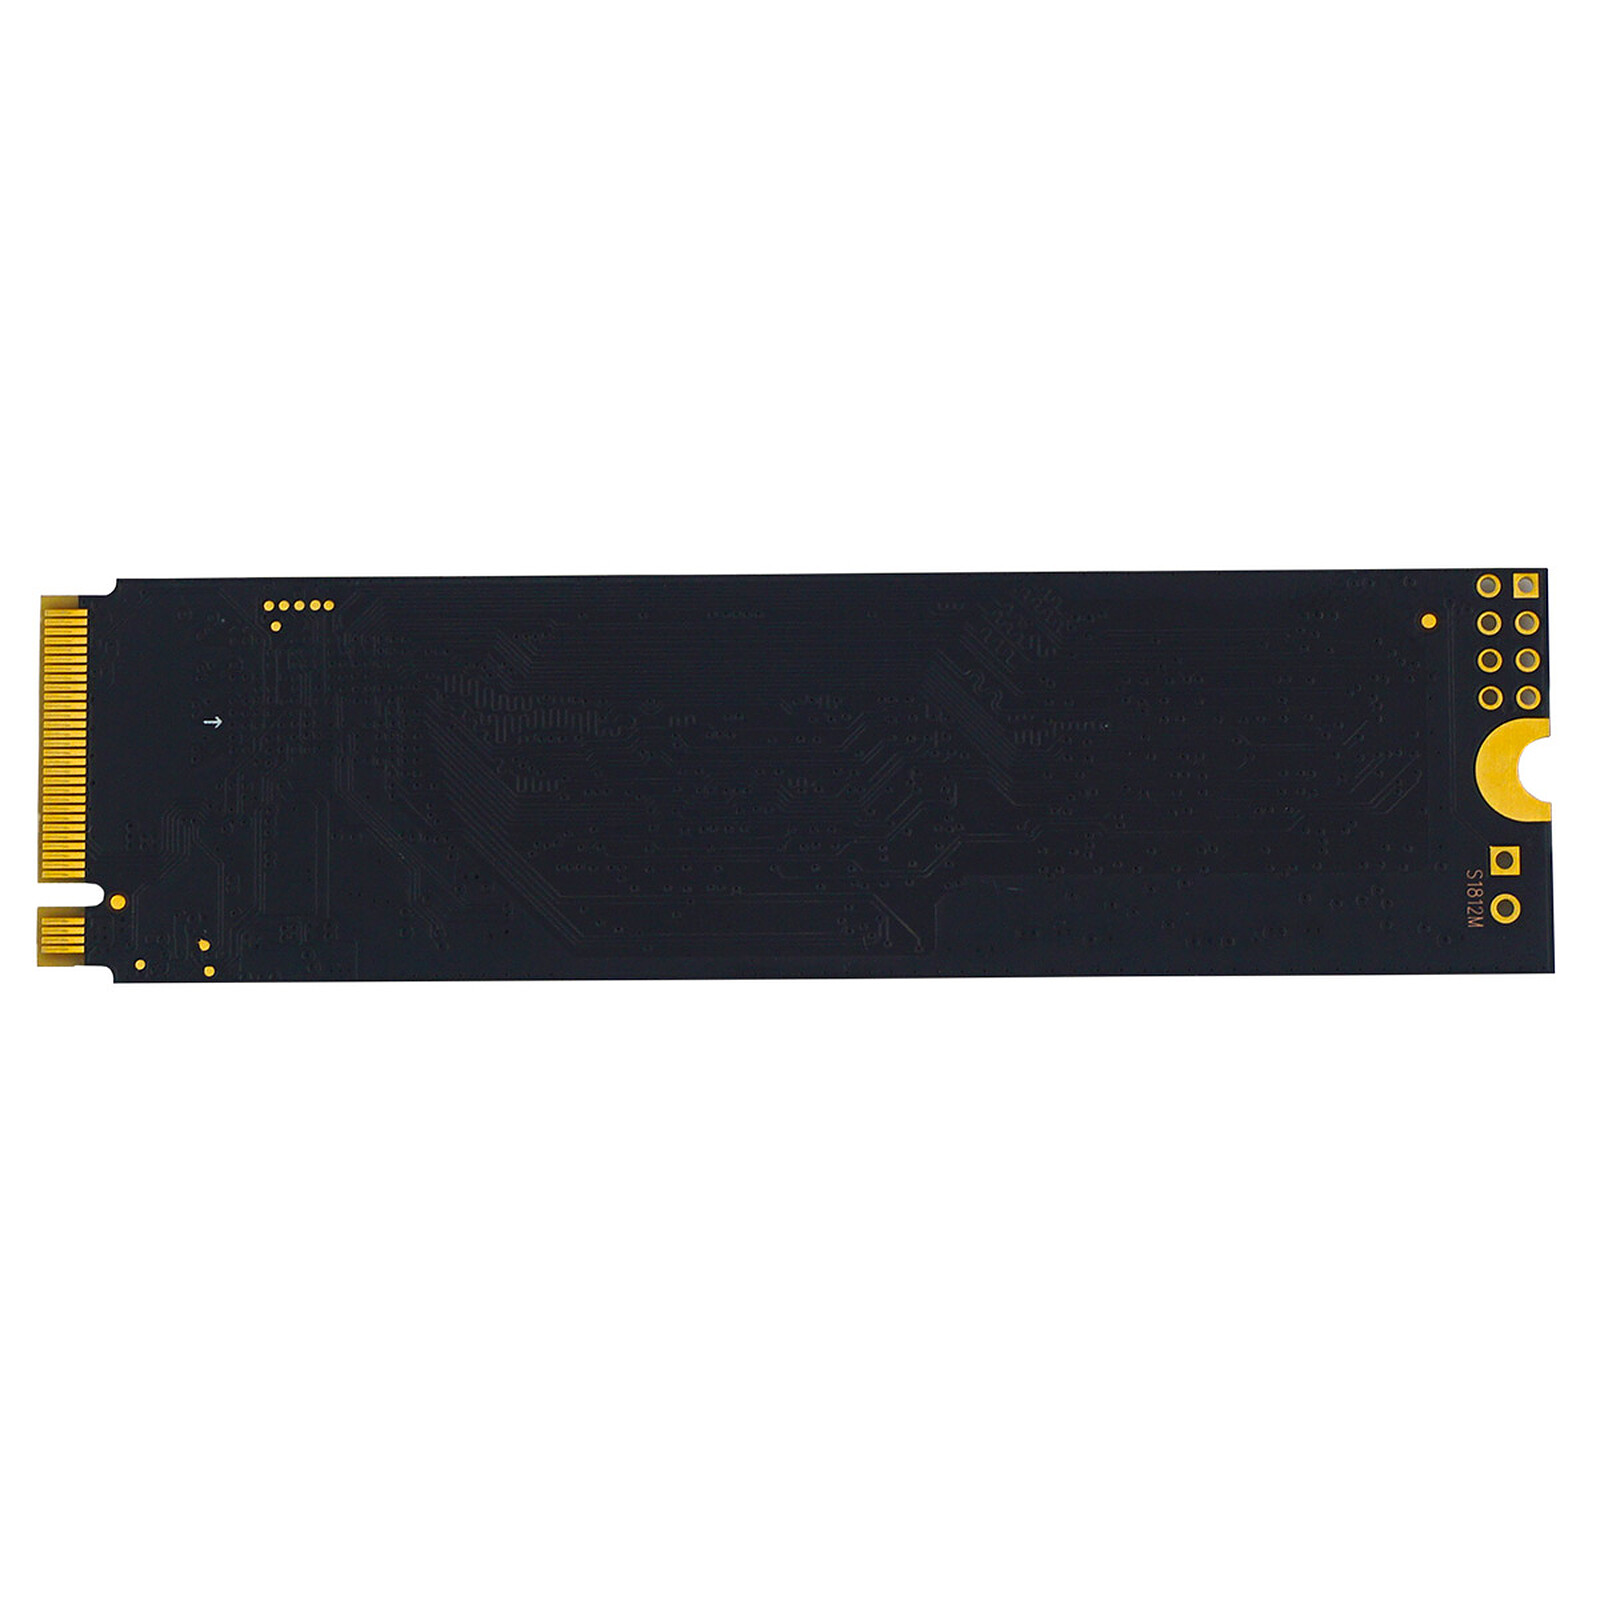 LDLC SSD F8 PLUS M.2 2280 PCIE NVME 480 GB - Disque SSD - Garantie 3 ans  LDLC